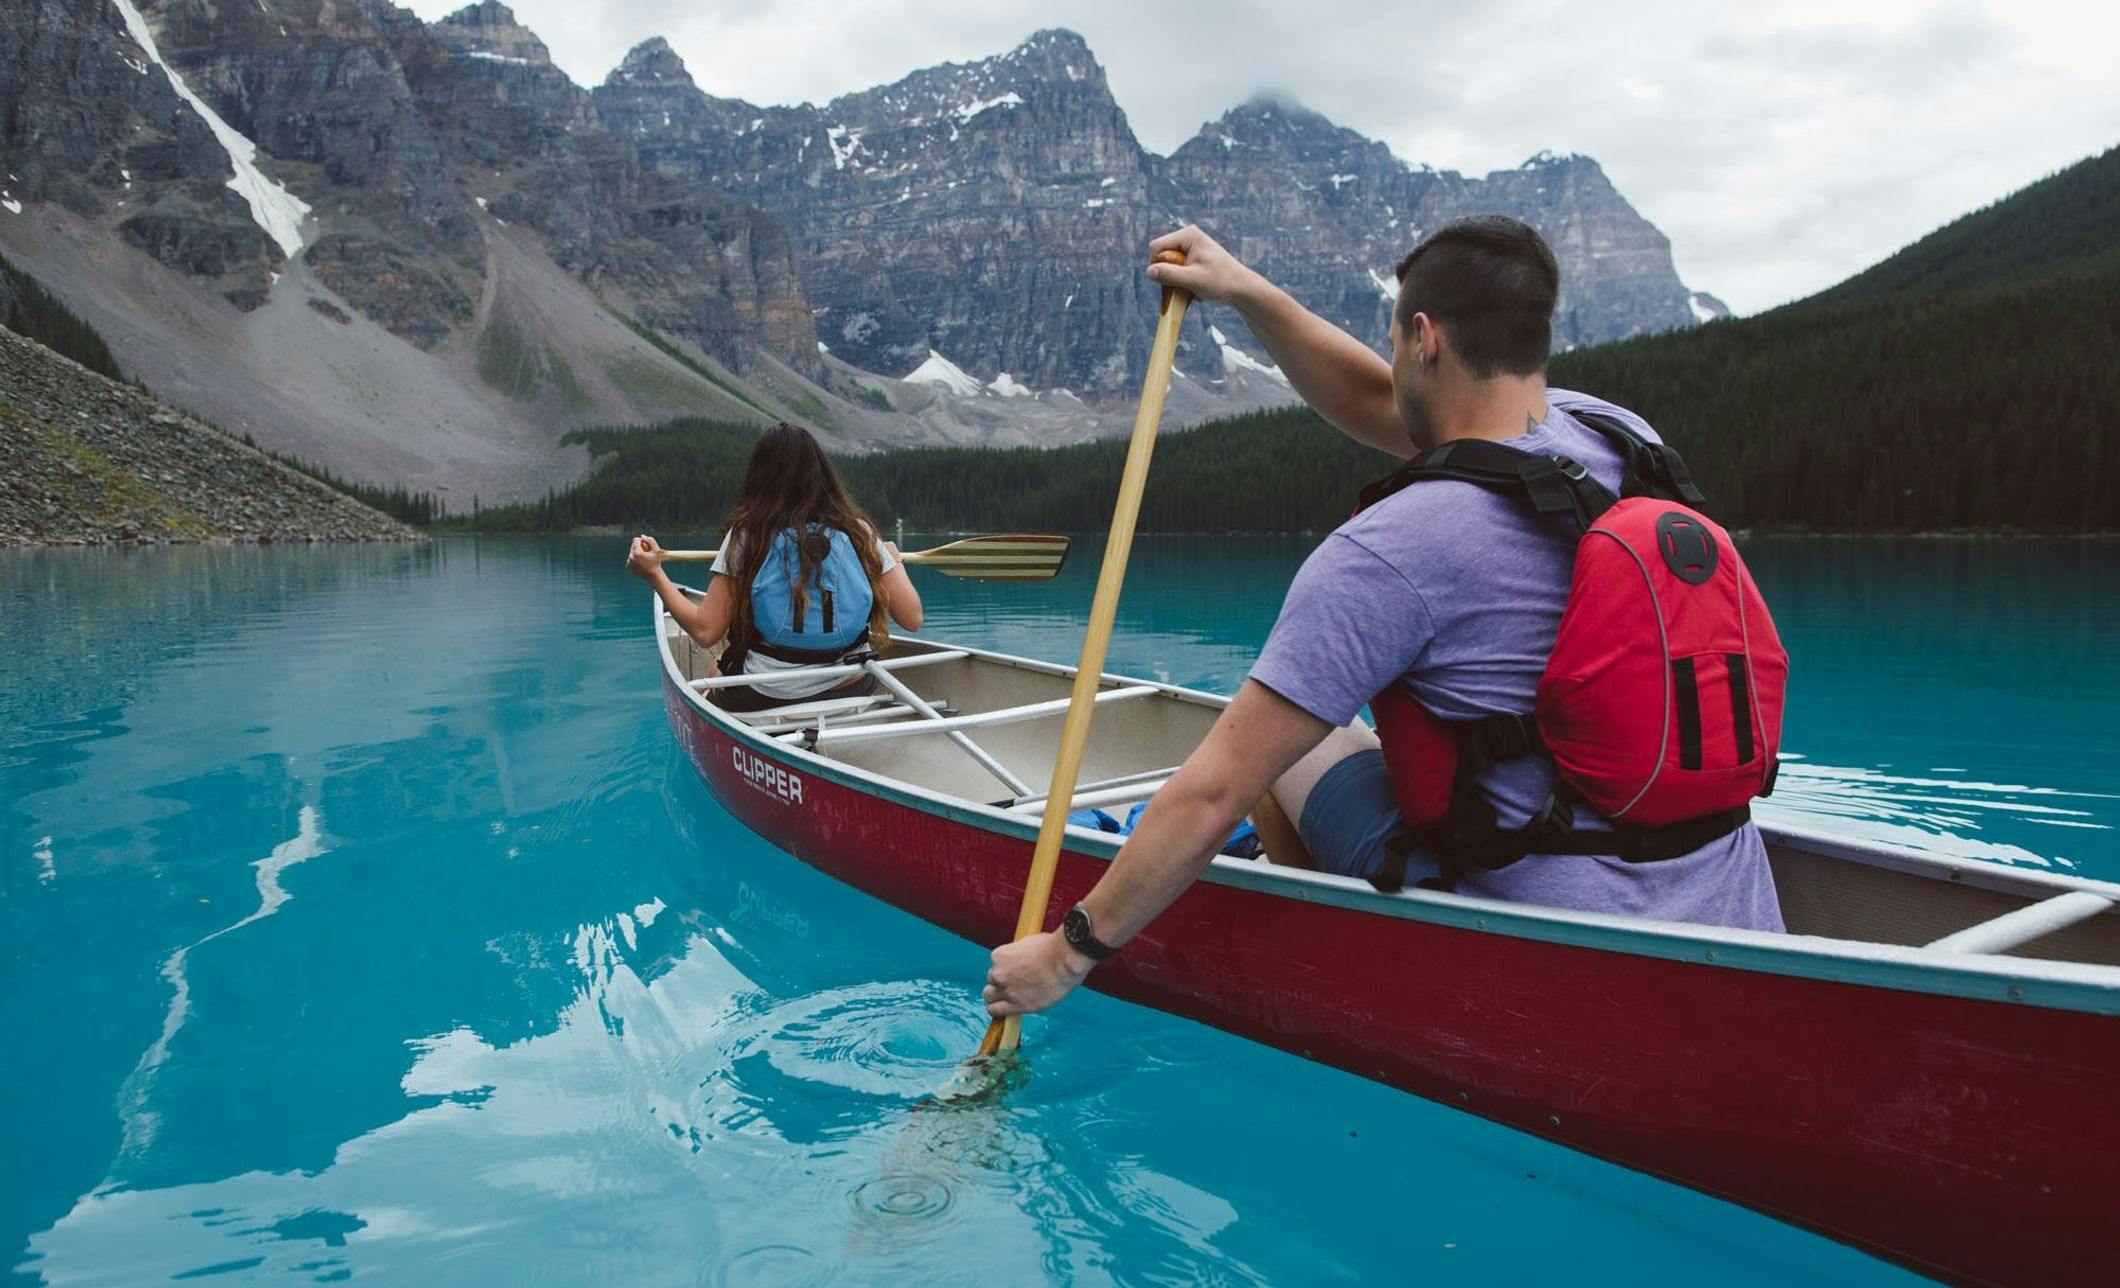 Canoeing Moraine Lake Banff National Park Jake Dyson